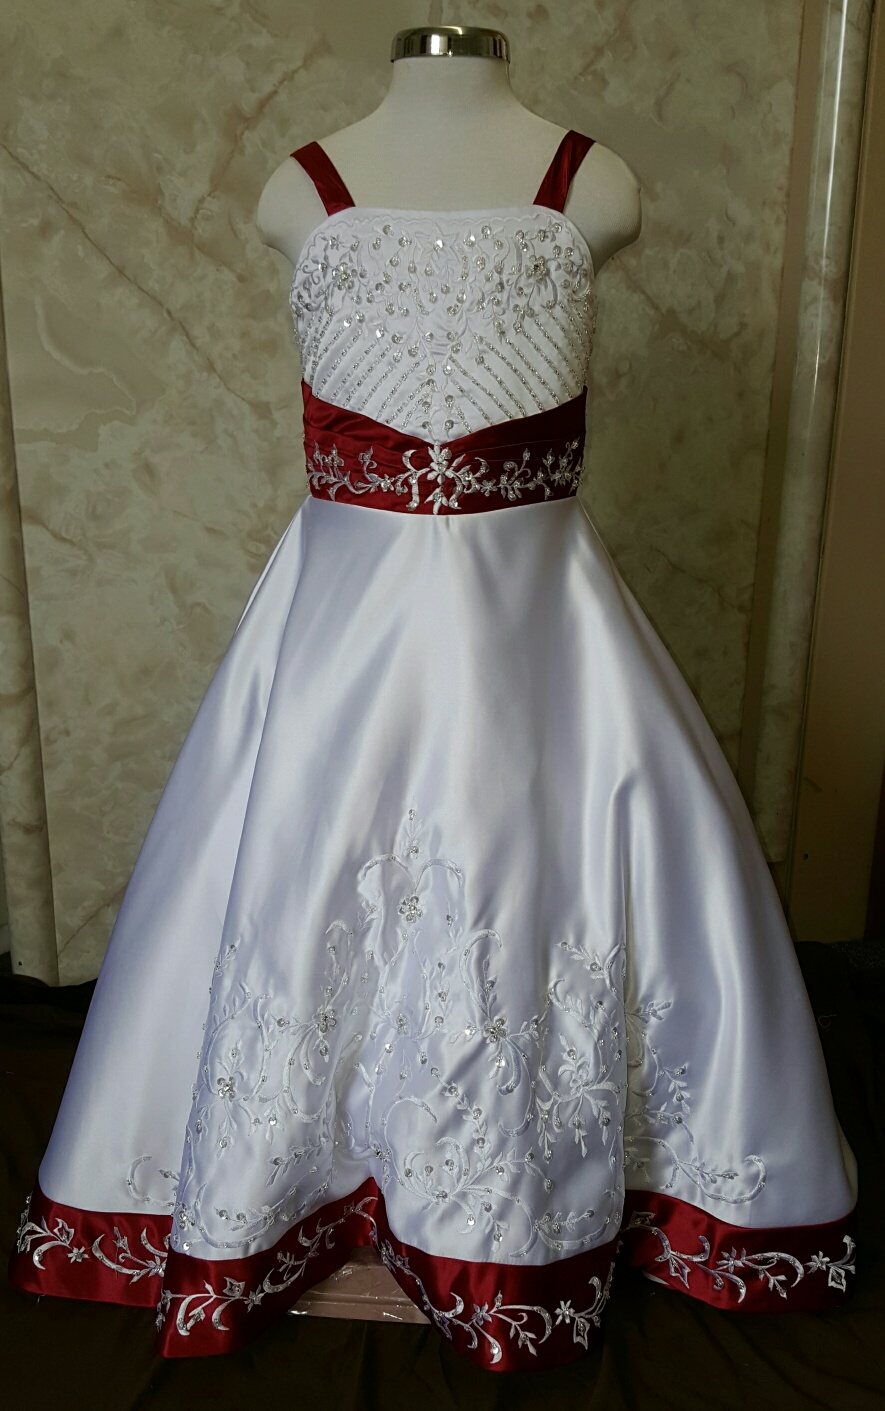 eed and white miniature wedding dress